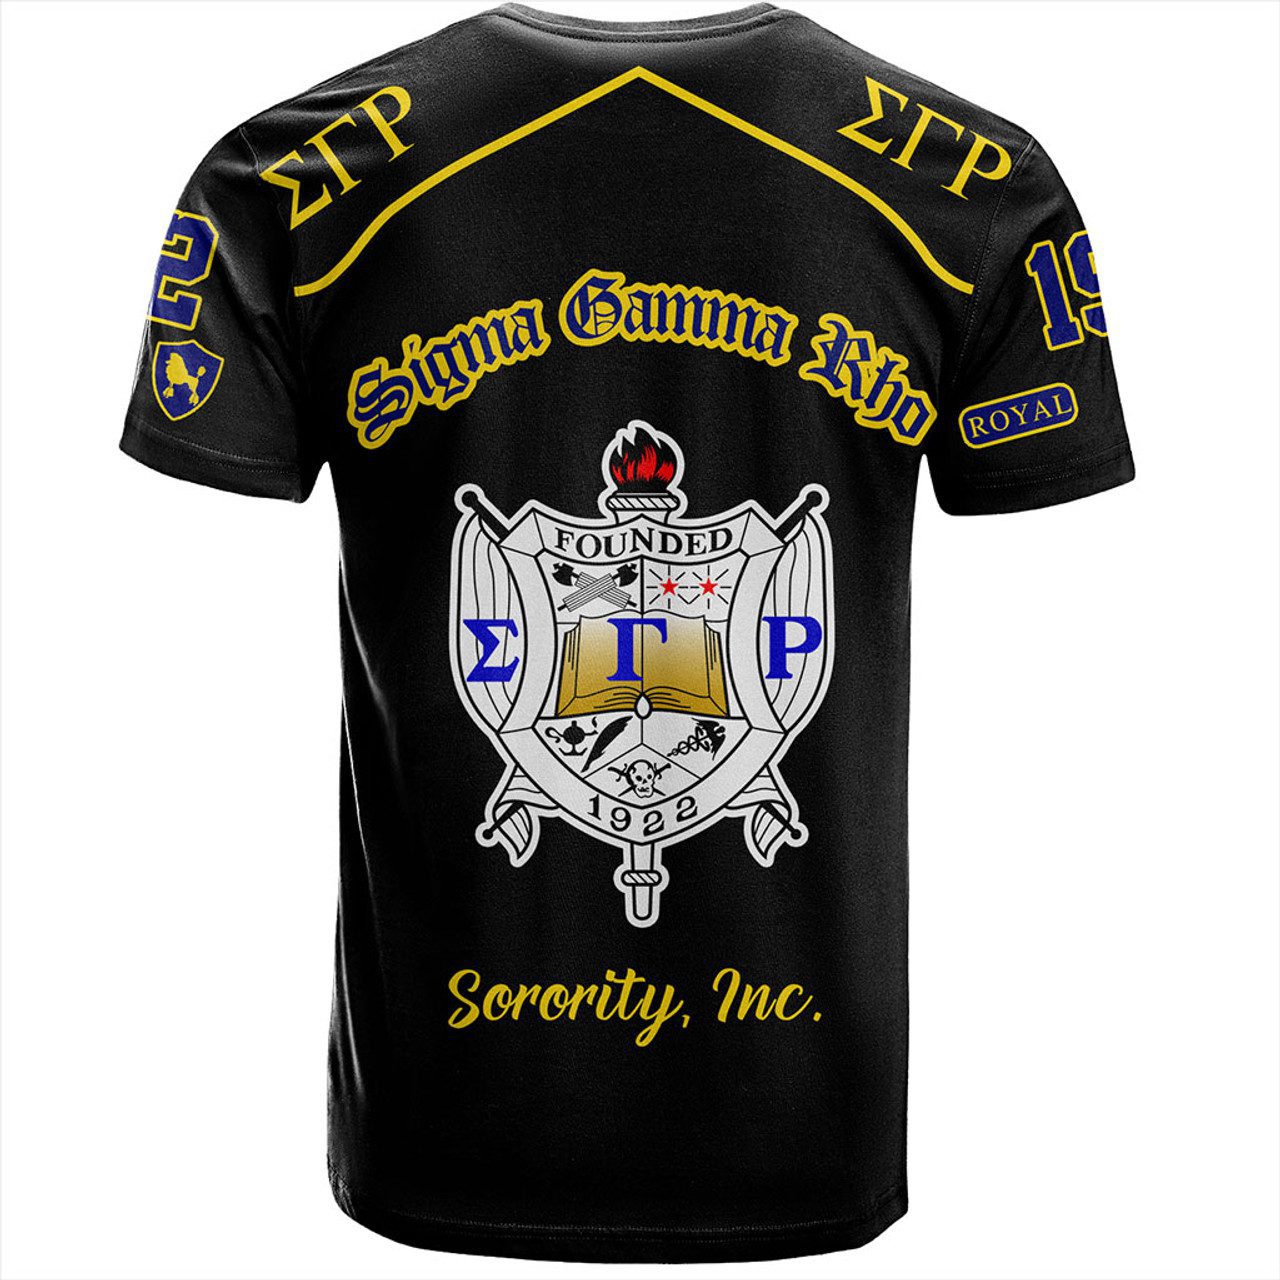 Sigma Gamma Rho T-Shirt Sorority Poodles